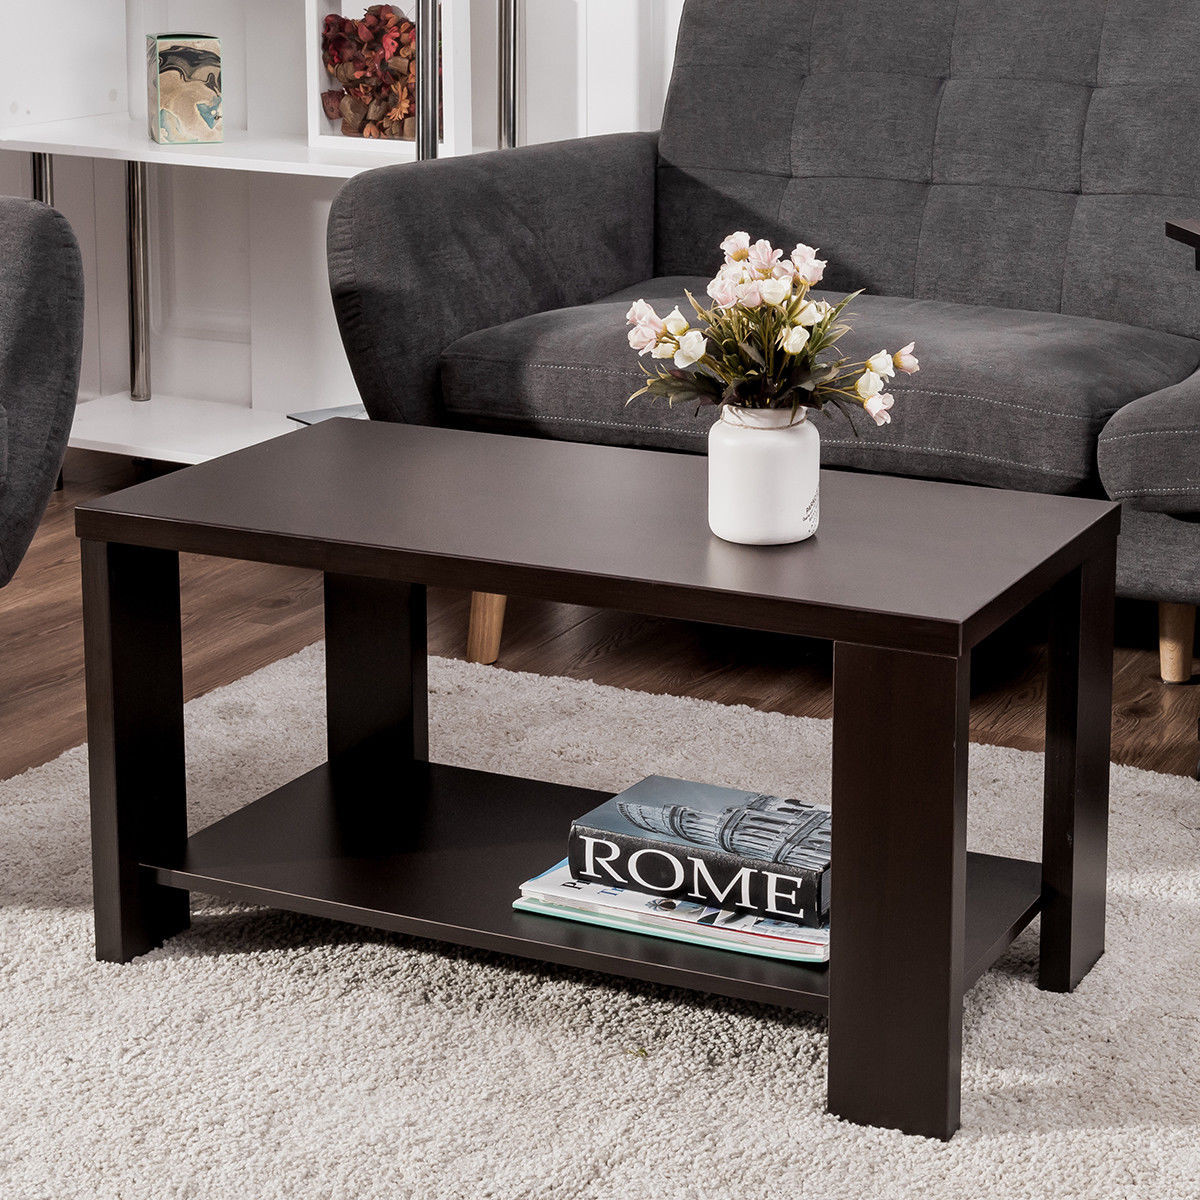 Modern Living Room Table
 Giantex Coffee Table Rectangular Cocktail Table Wood